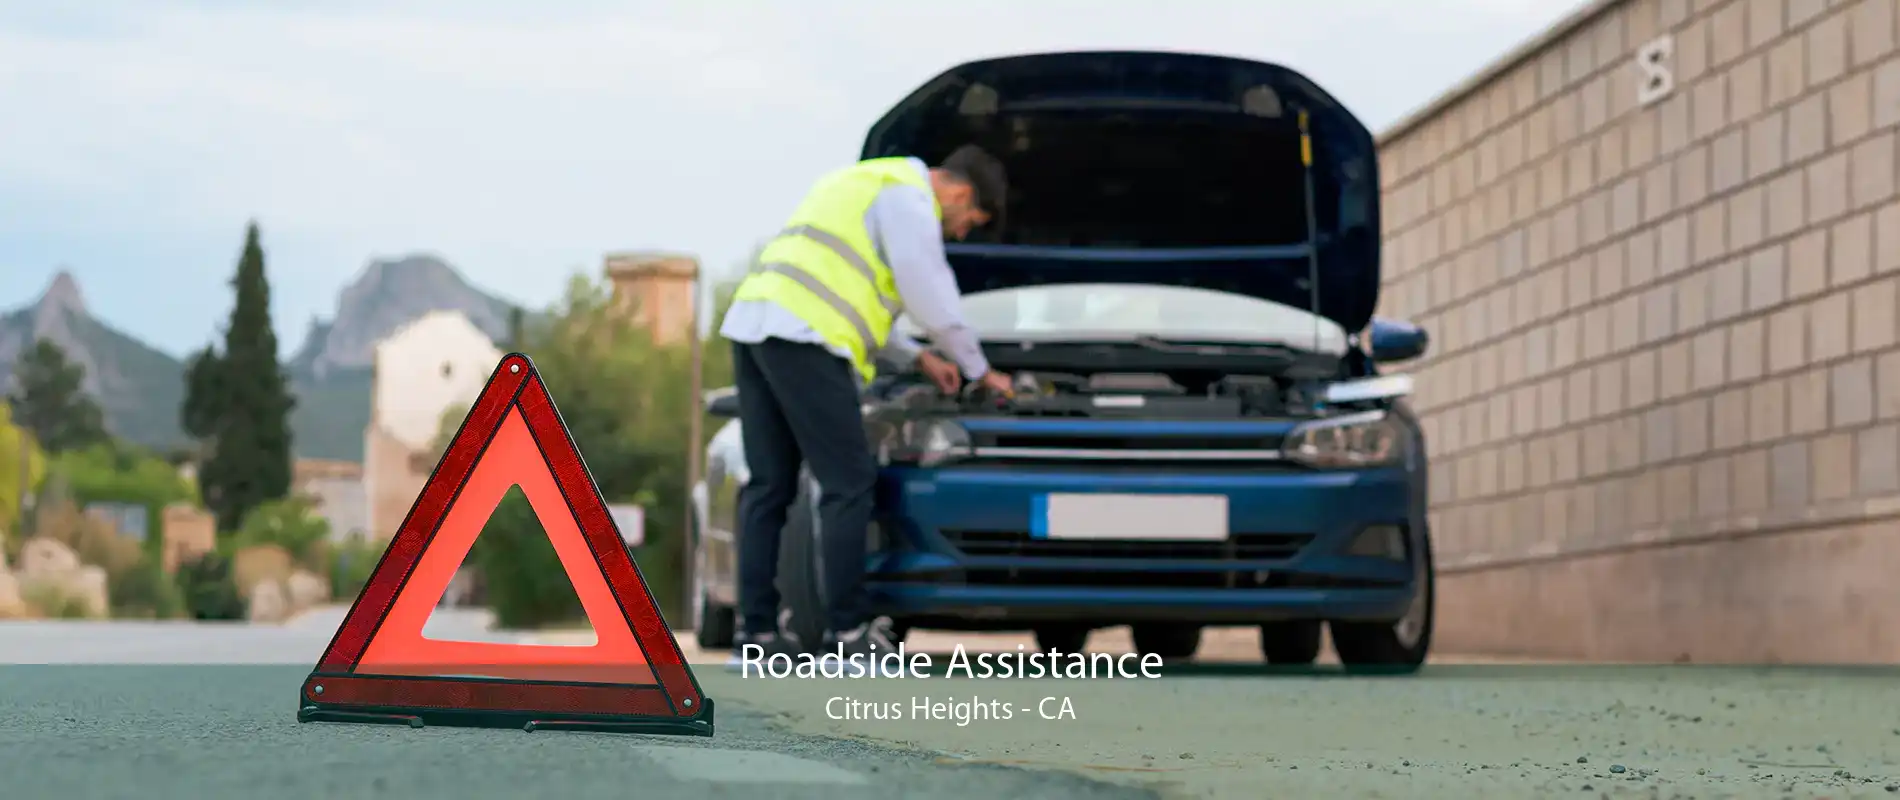 Roadside Assistance Citrus Heights - CA